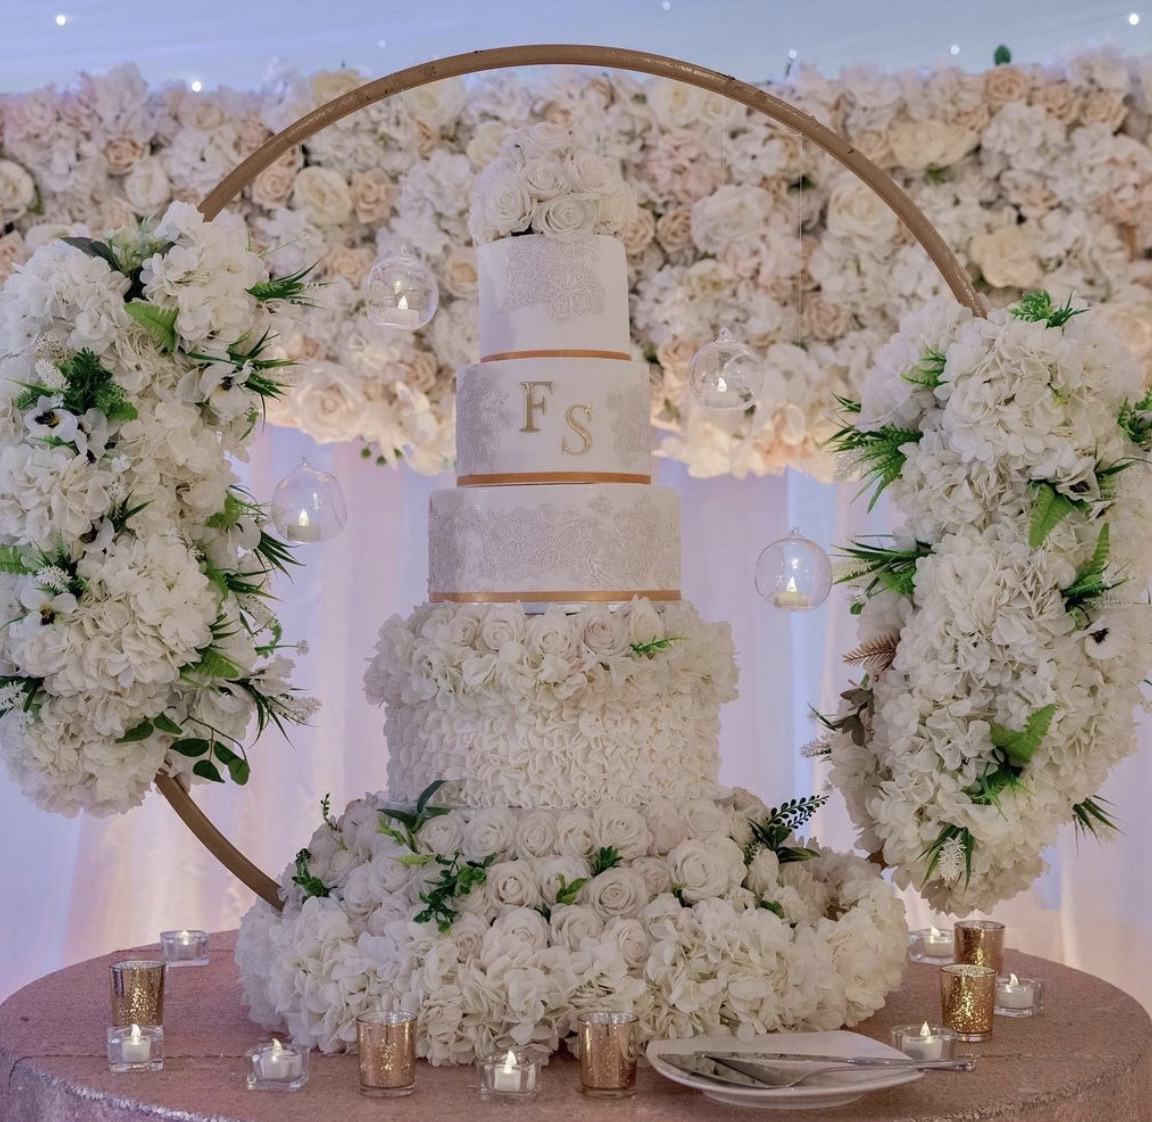 Grand & Dreamy! 9 Fabulous Wedding Cakes - Her World Singapore